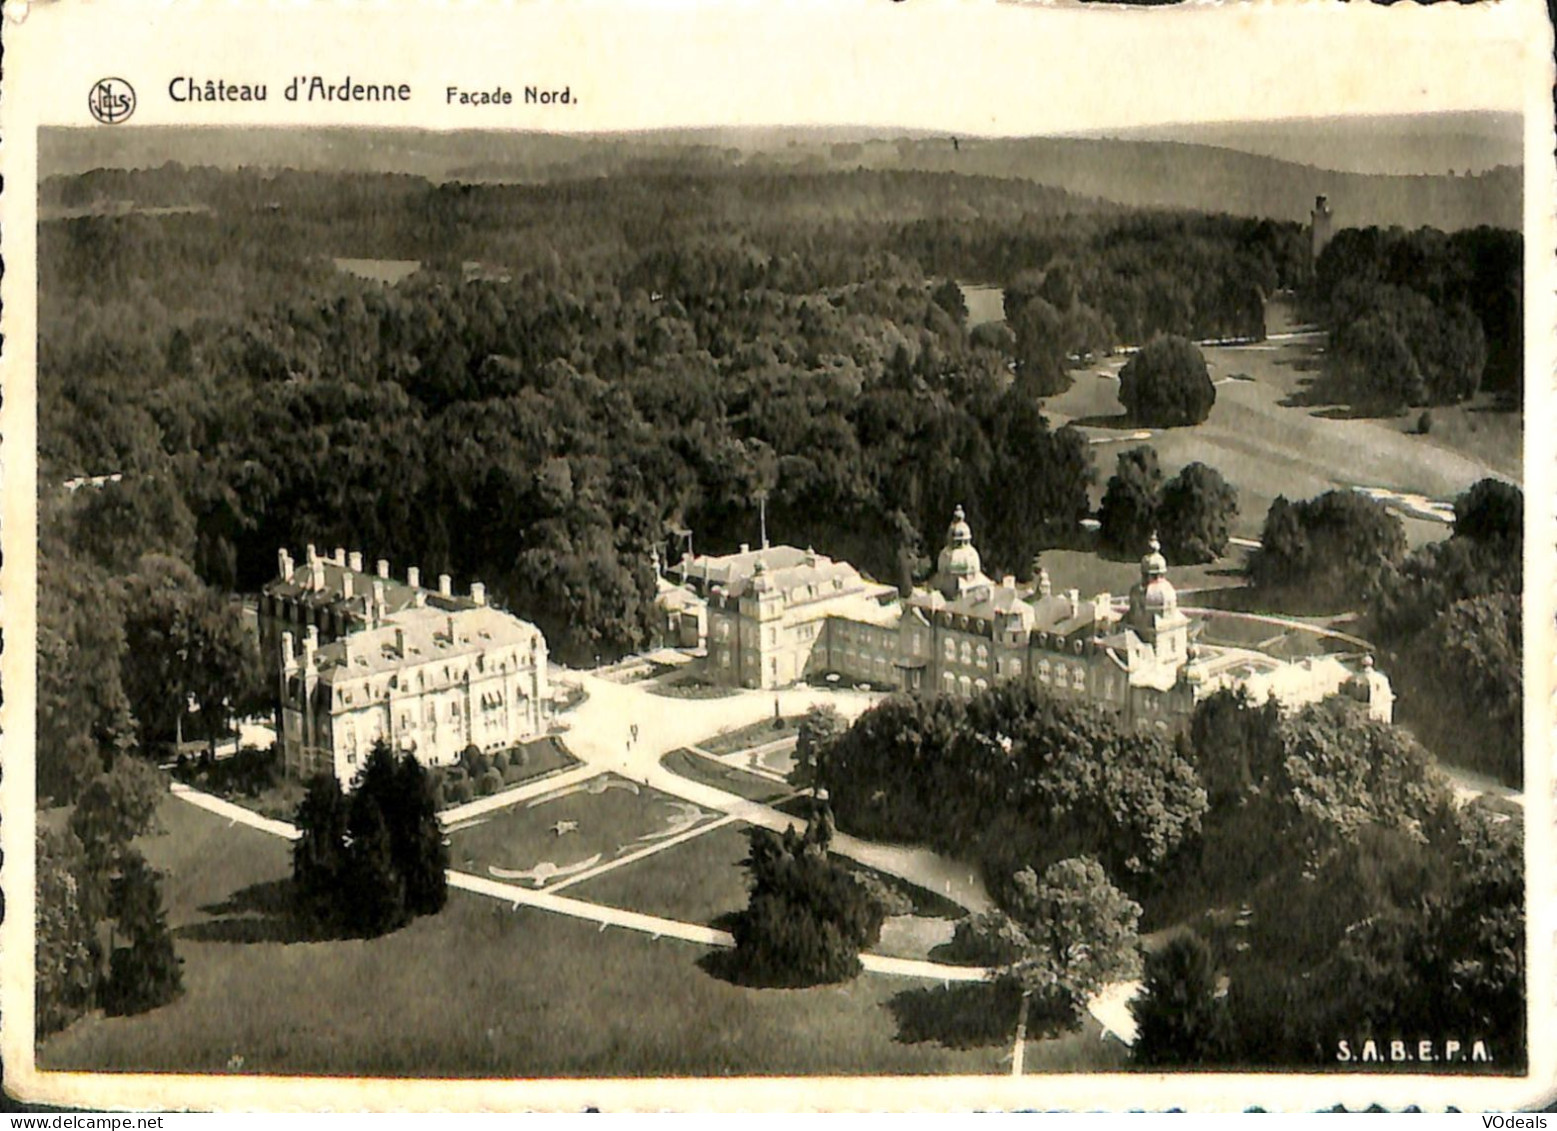 Belgique - Belgique - Namur - Houyet - Château D'Ardenne - Façade Nord - Saint-Hubert